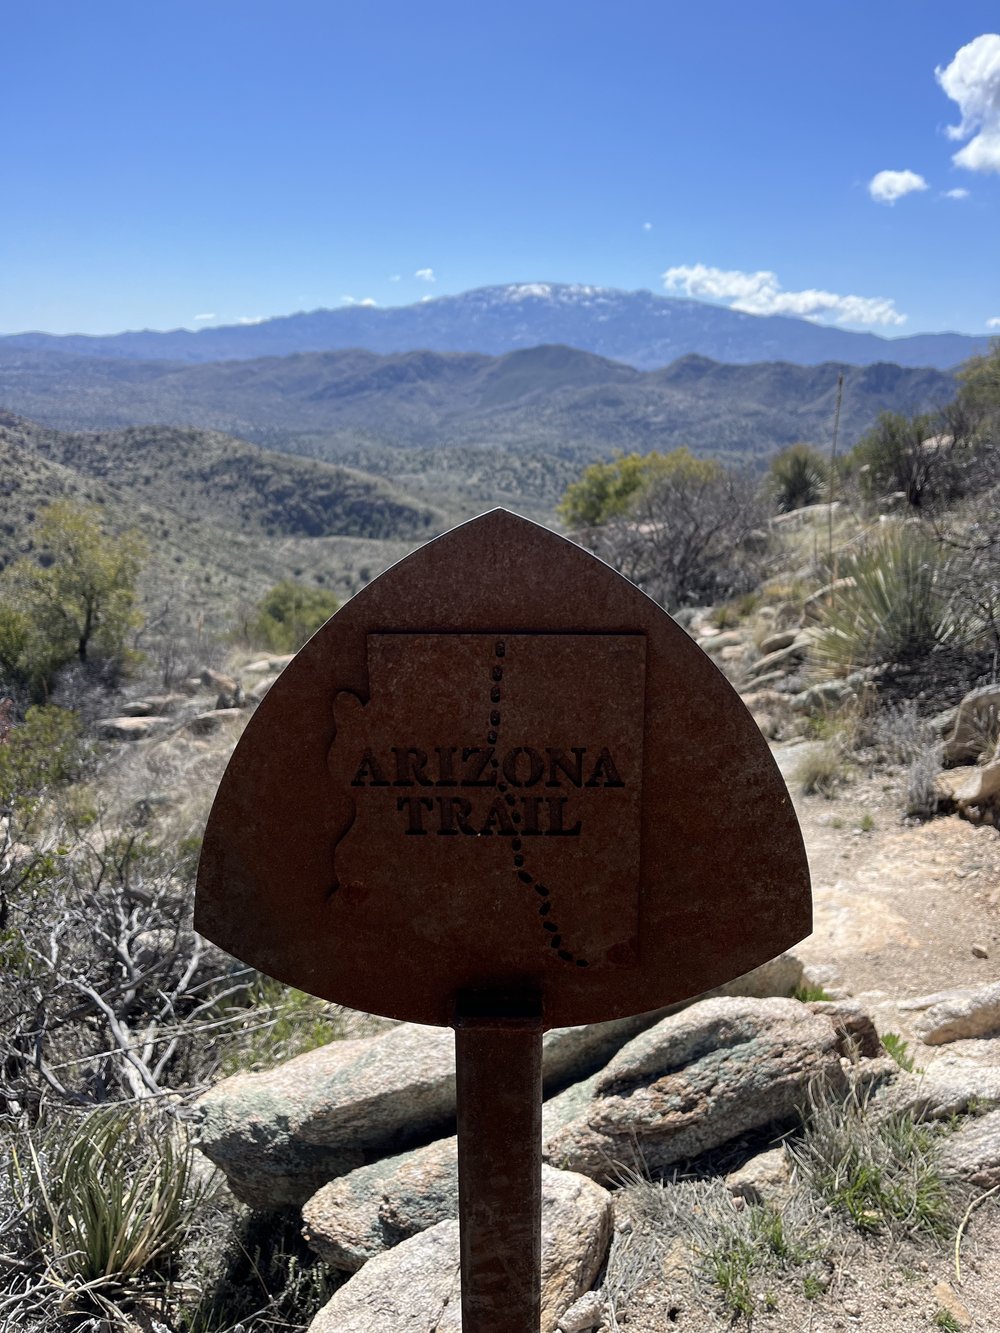 Arizona Trail Sign Mica Mountain.jpg